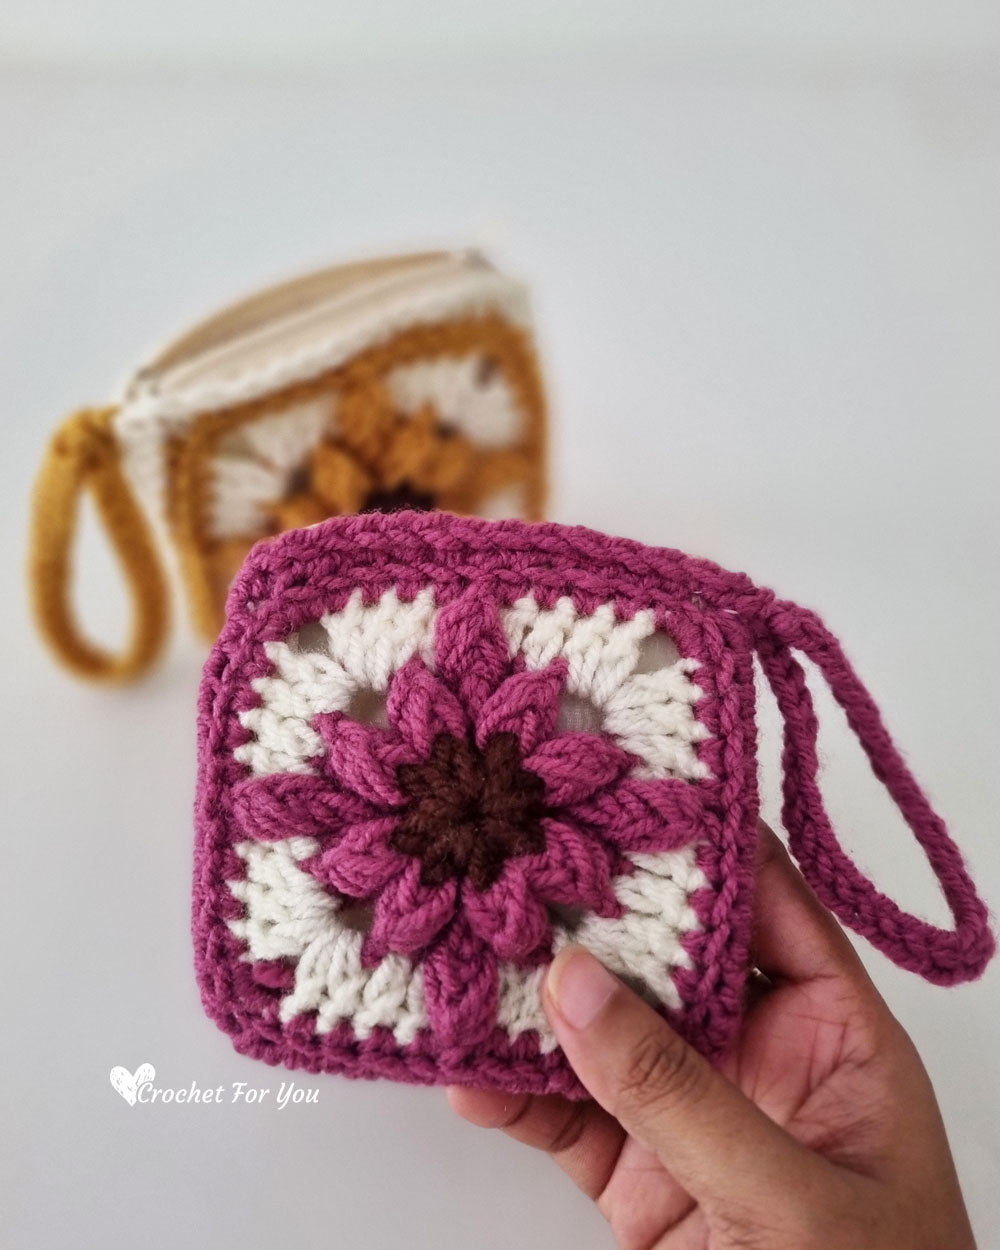 Knitting Coin Purse Garter Stitch Easy tutorial.😊 - YouTube